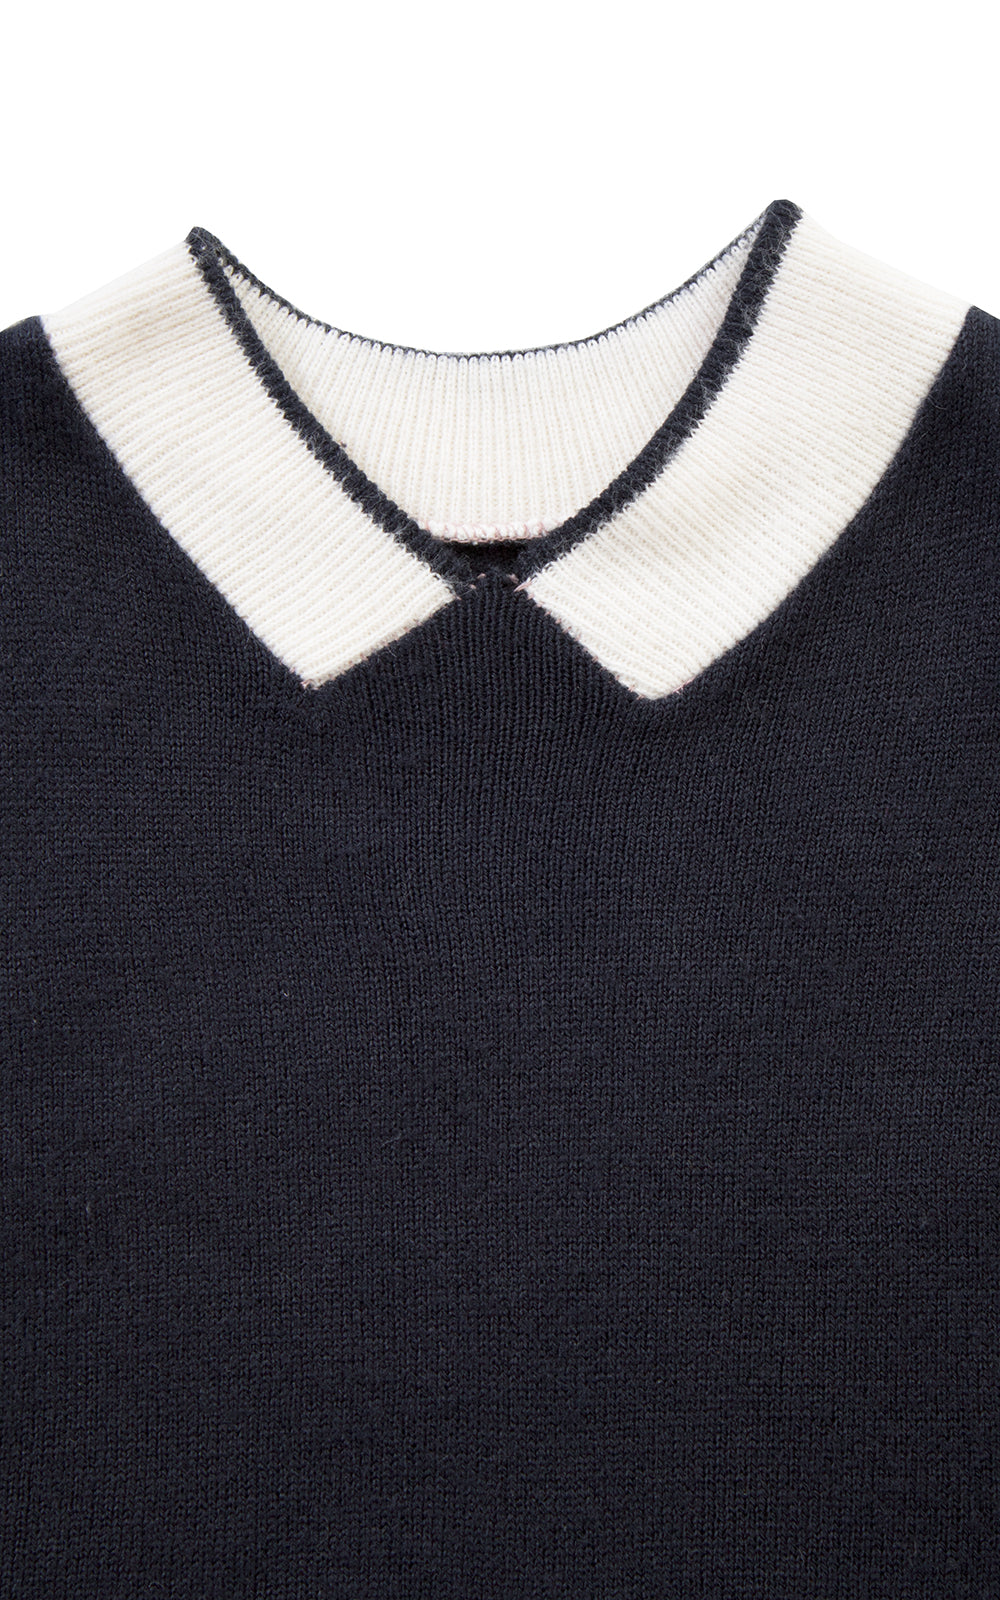 1950s Faux Peter Pan Collar Knit Sweater Top